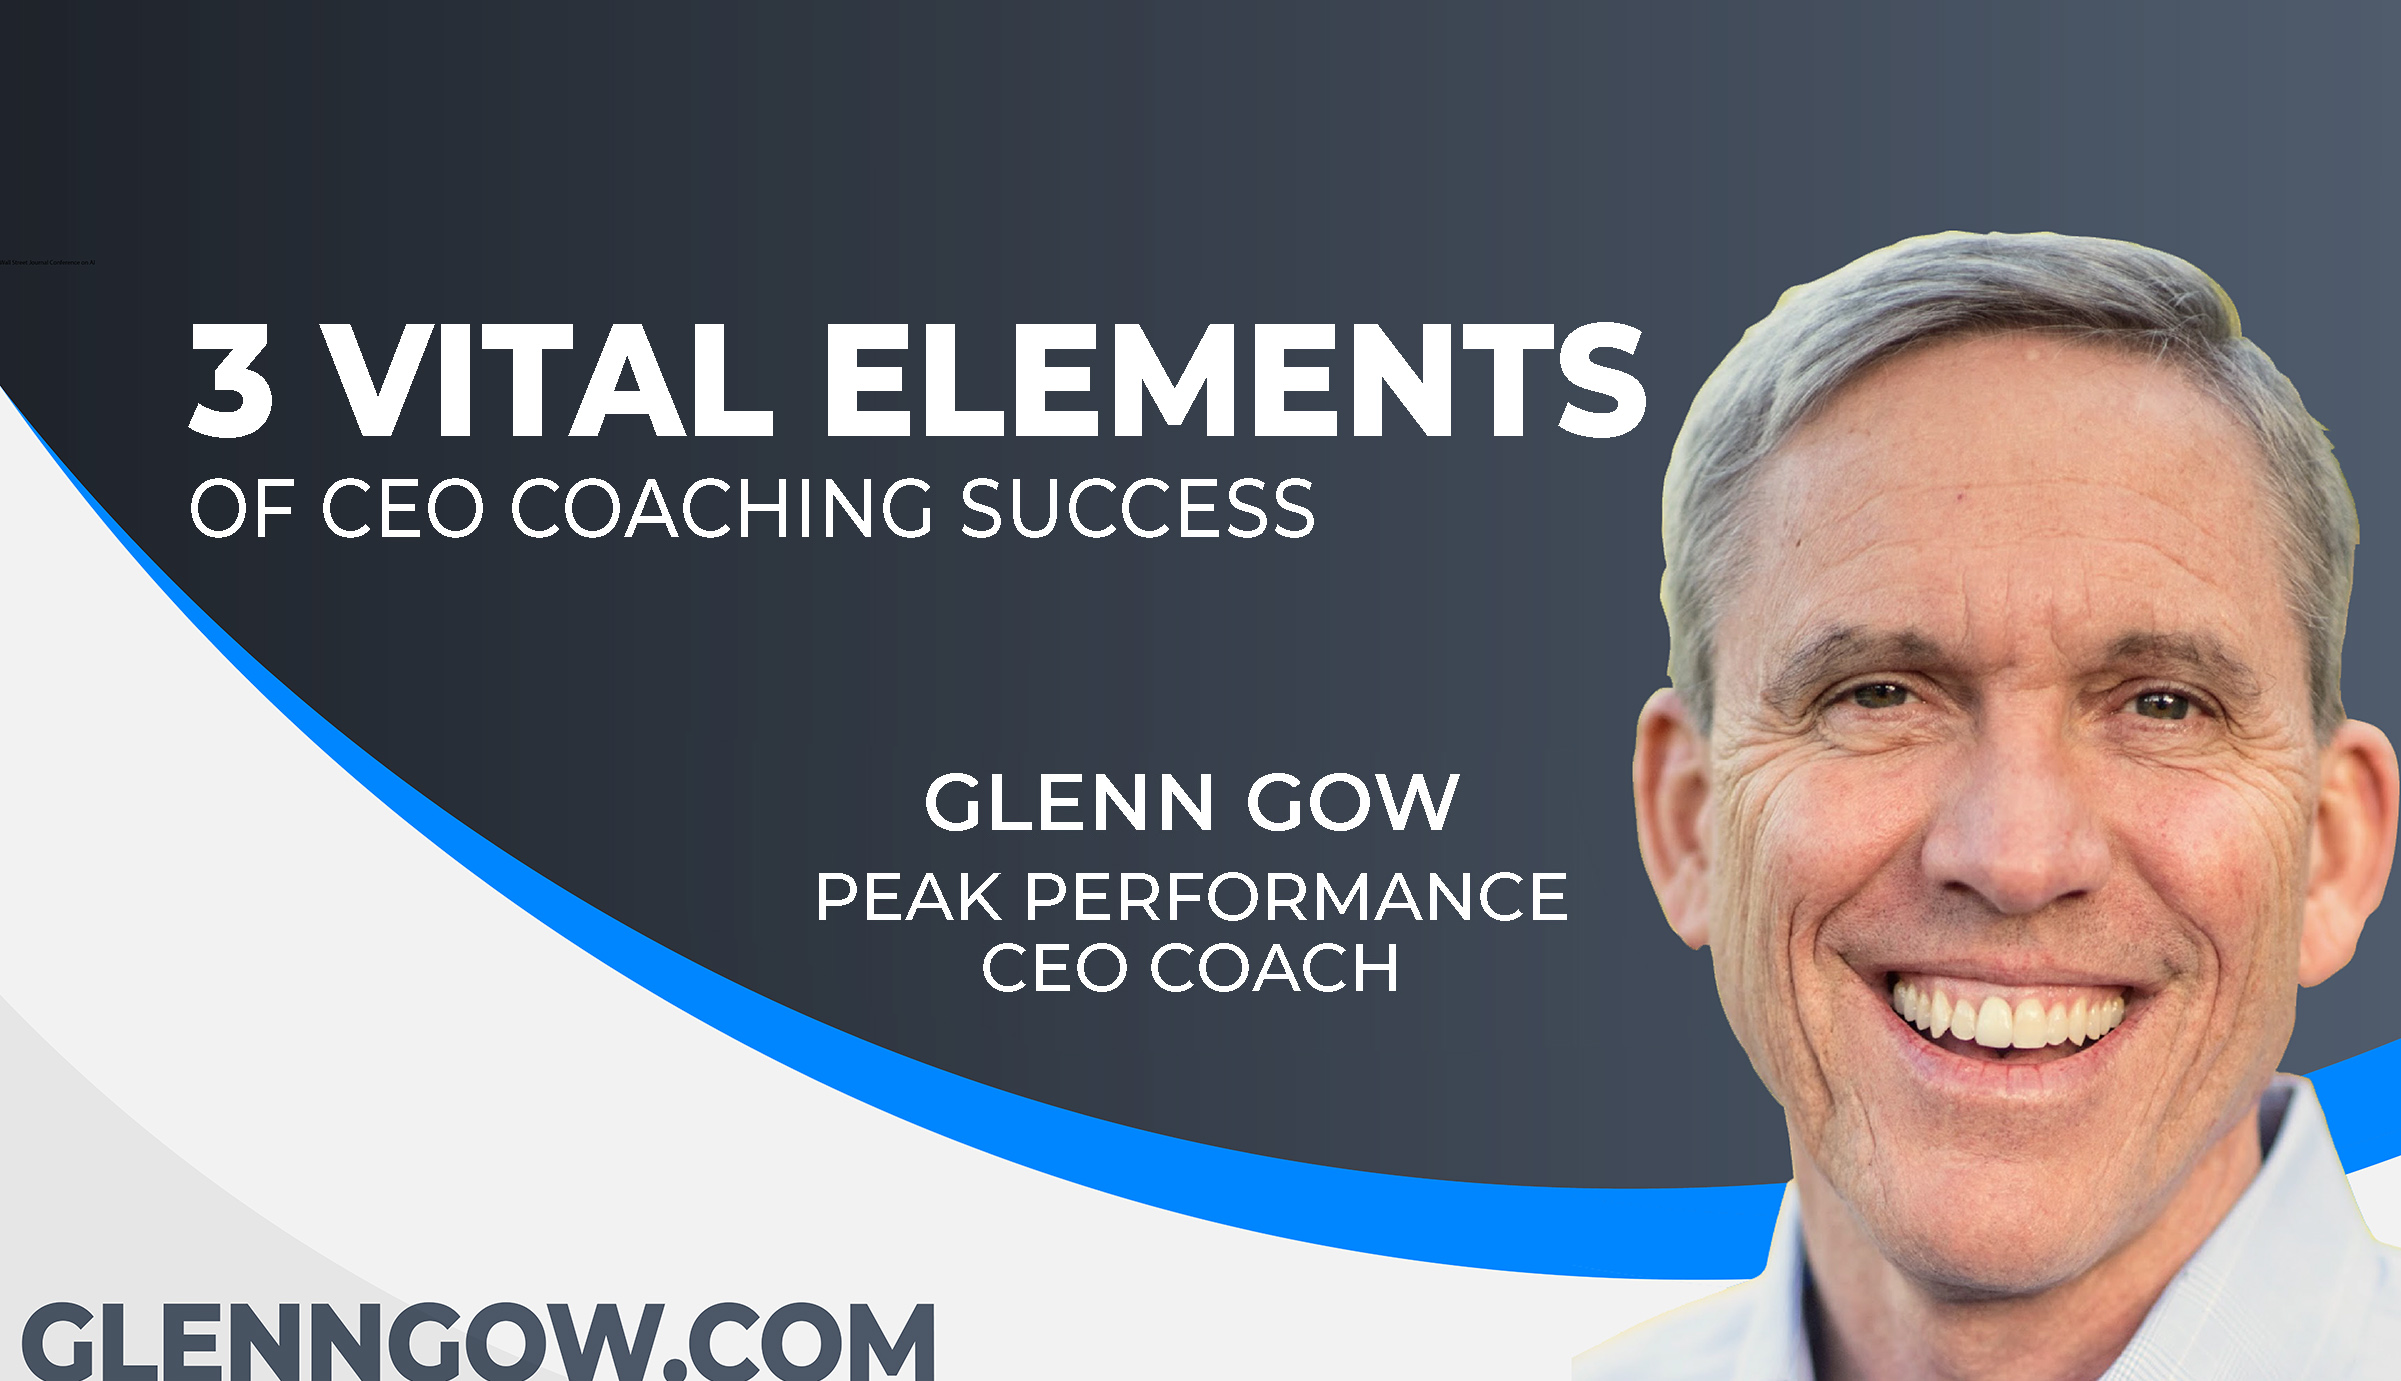 Glenn Gow Thumbnail 3 Vital Elements of CEO Coaching Success Blog Image